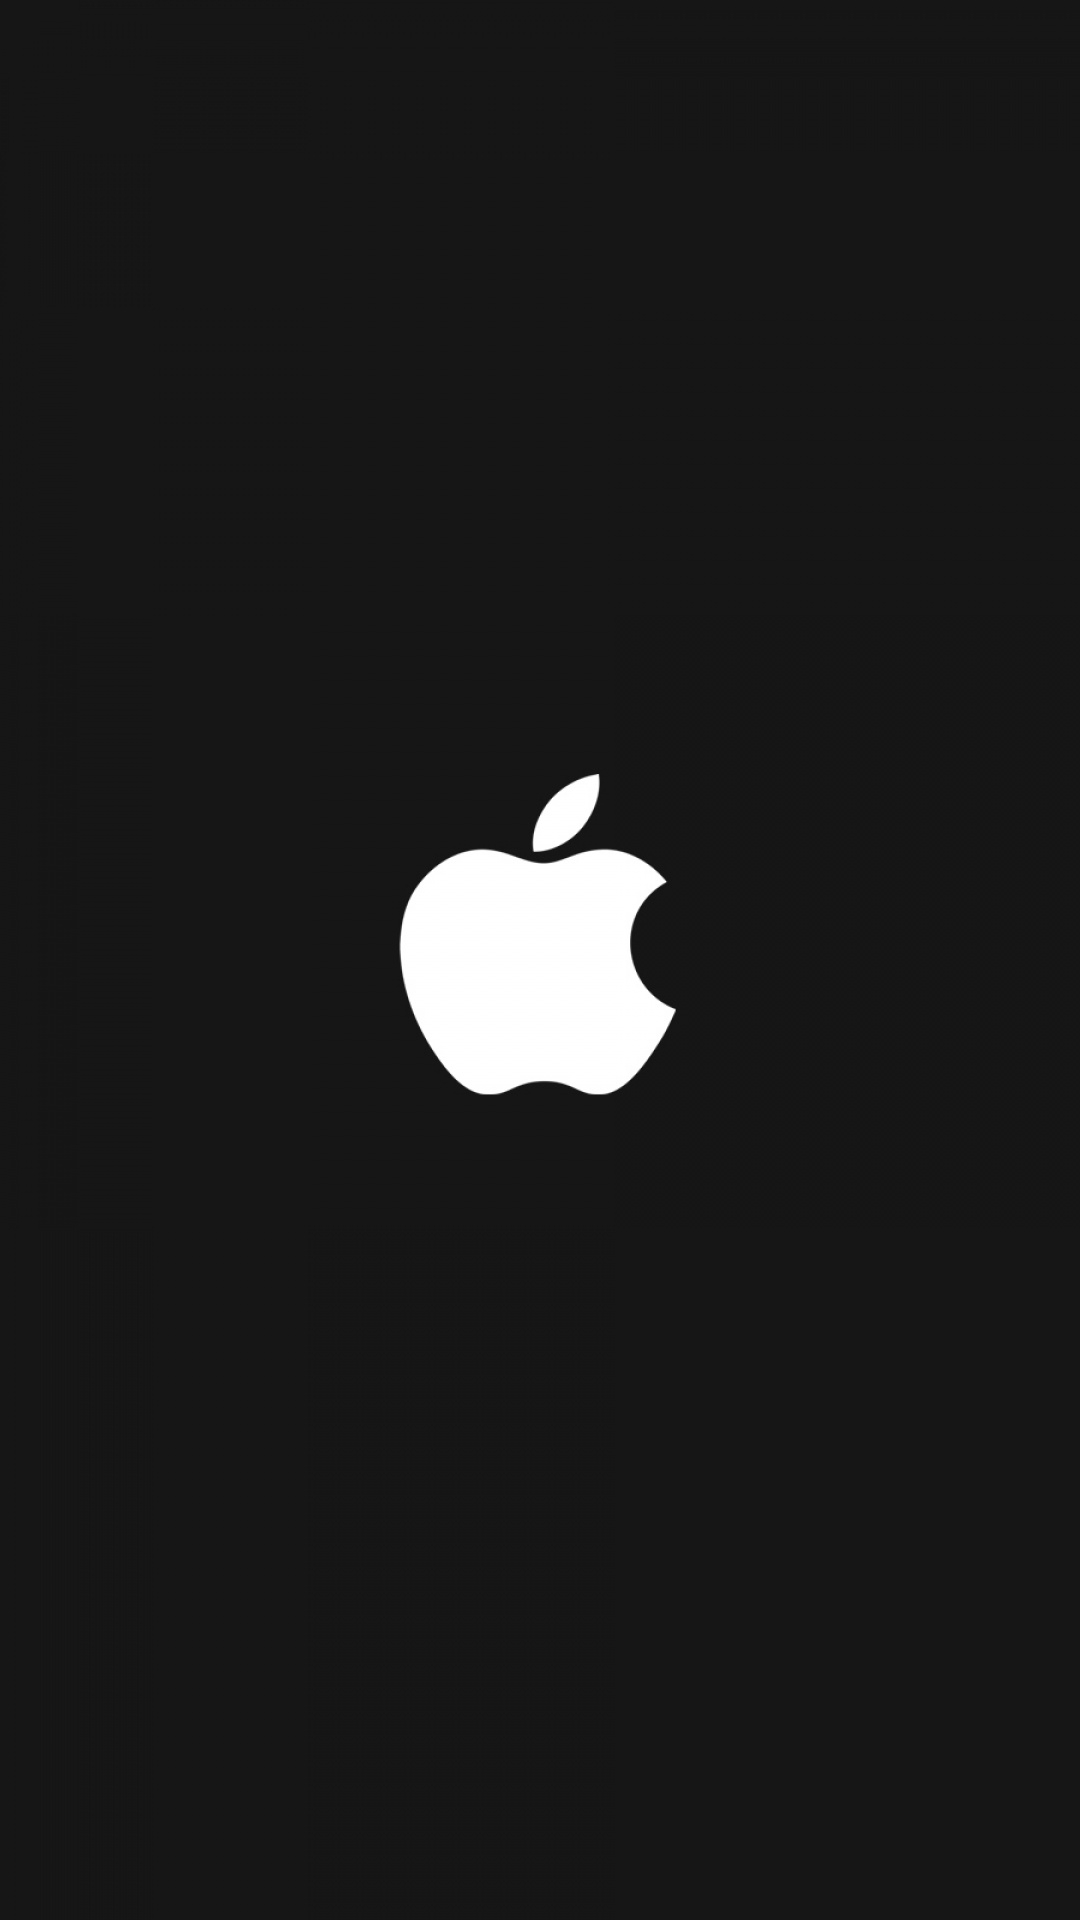 49 Apple Logo Iphone 6 Wallpaper On Wallpapersafari